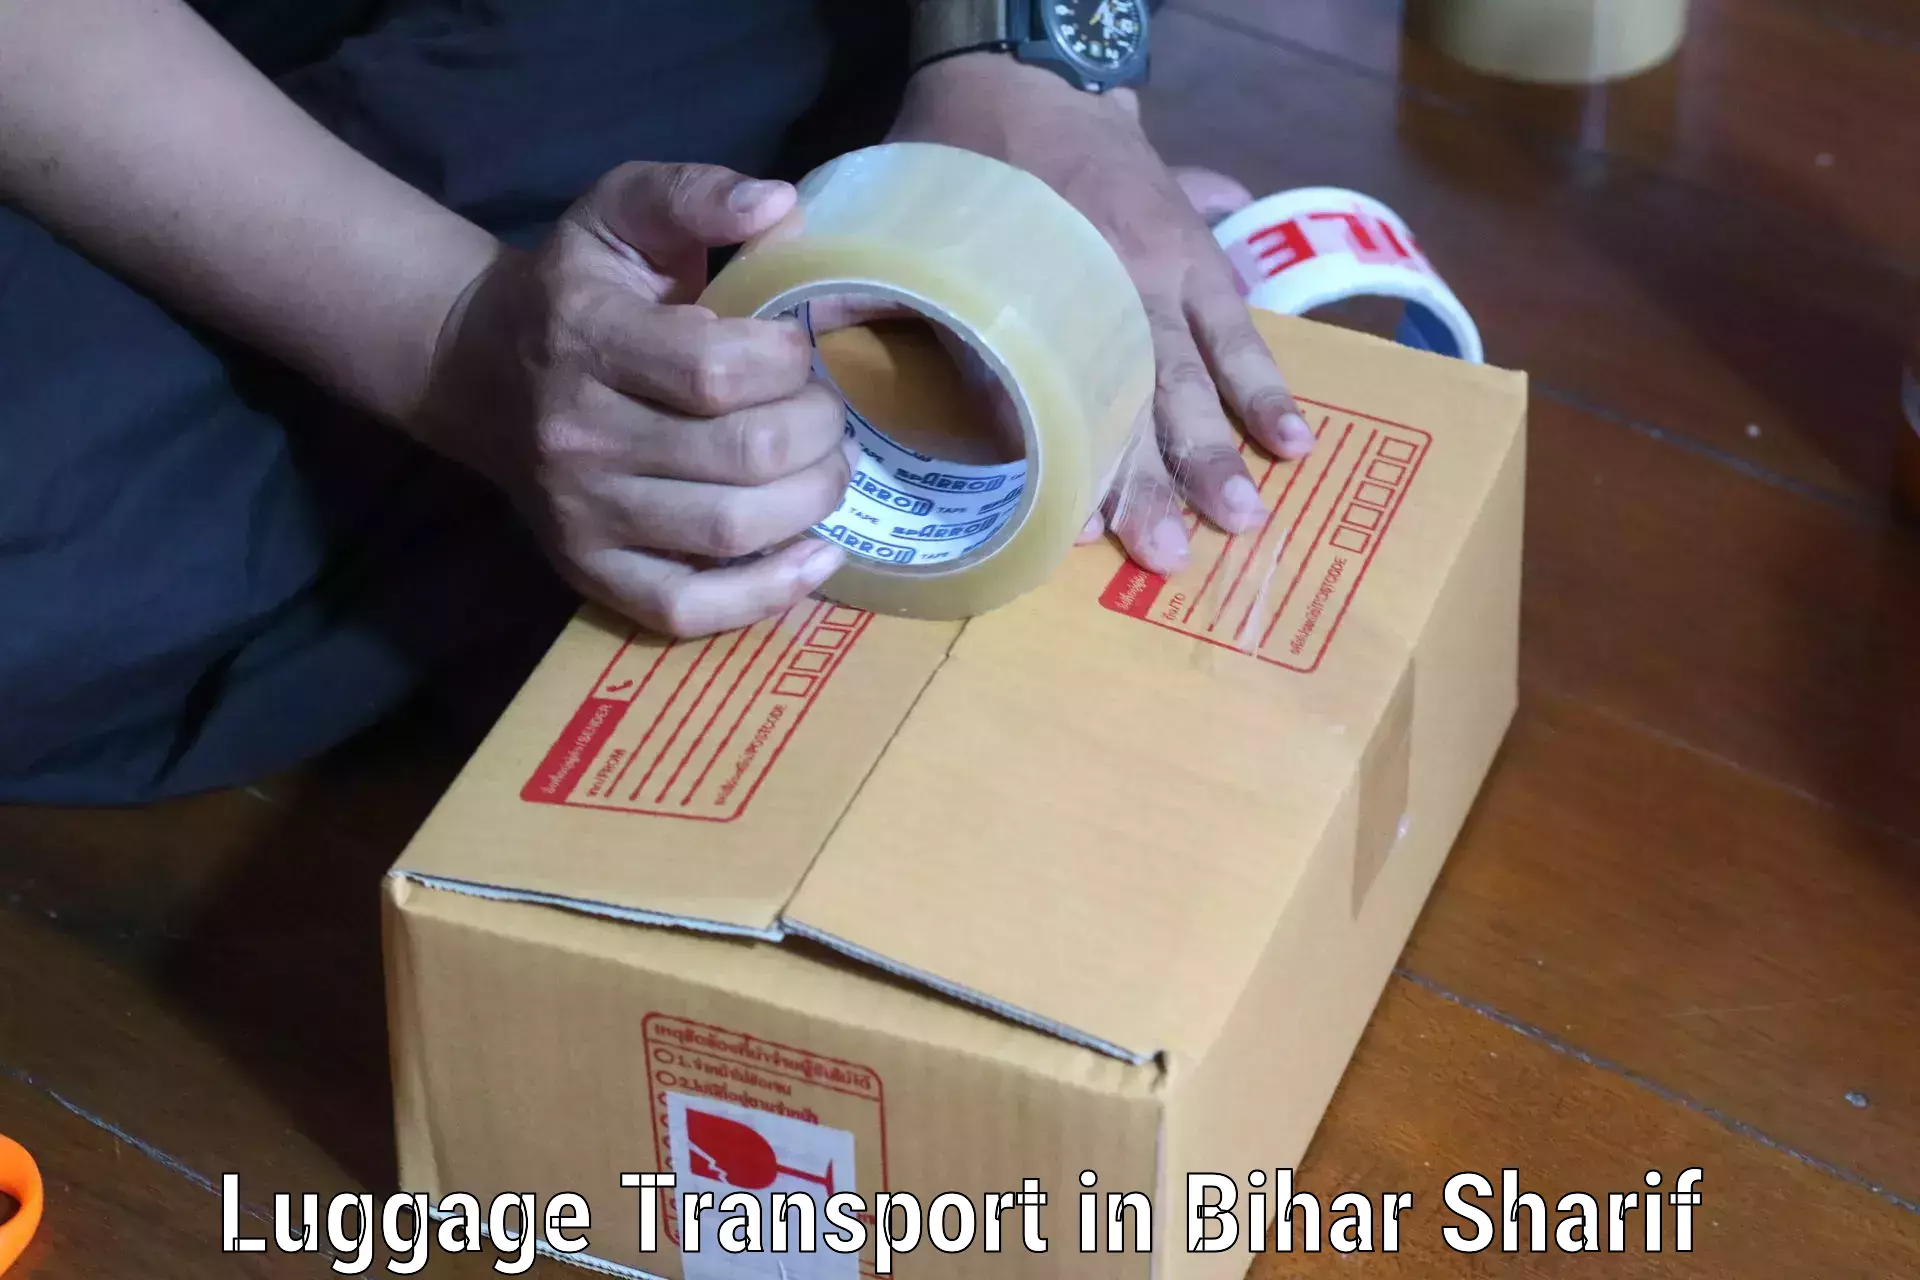 Luggage transit service in Bihar Sharif